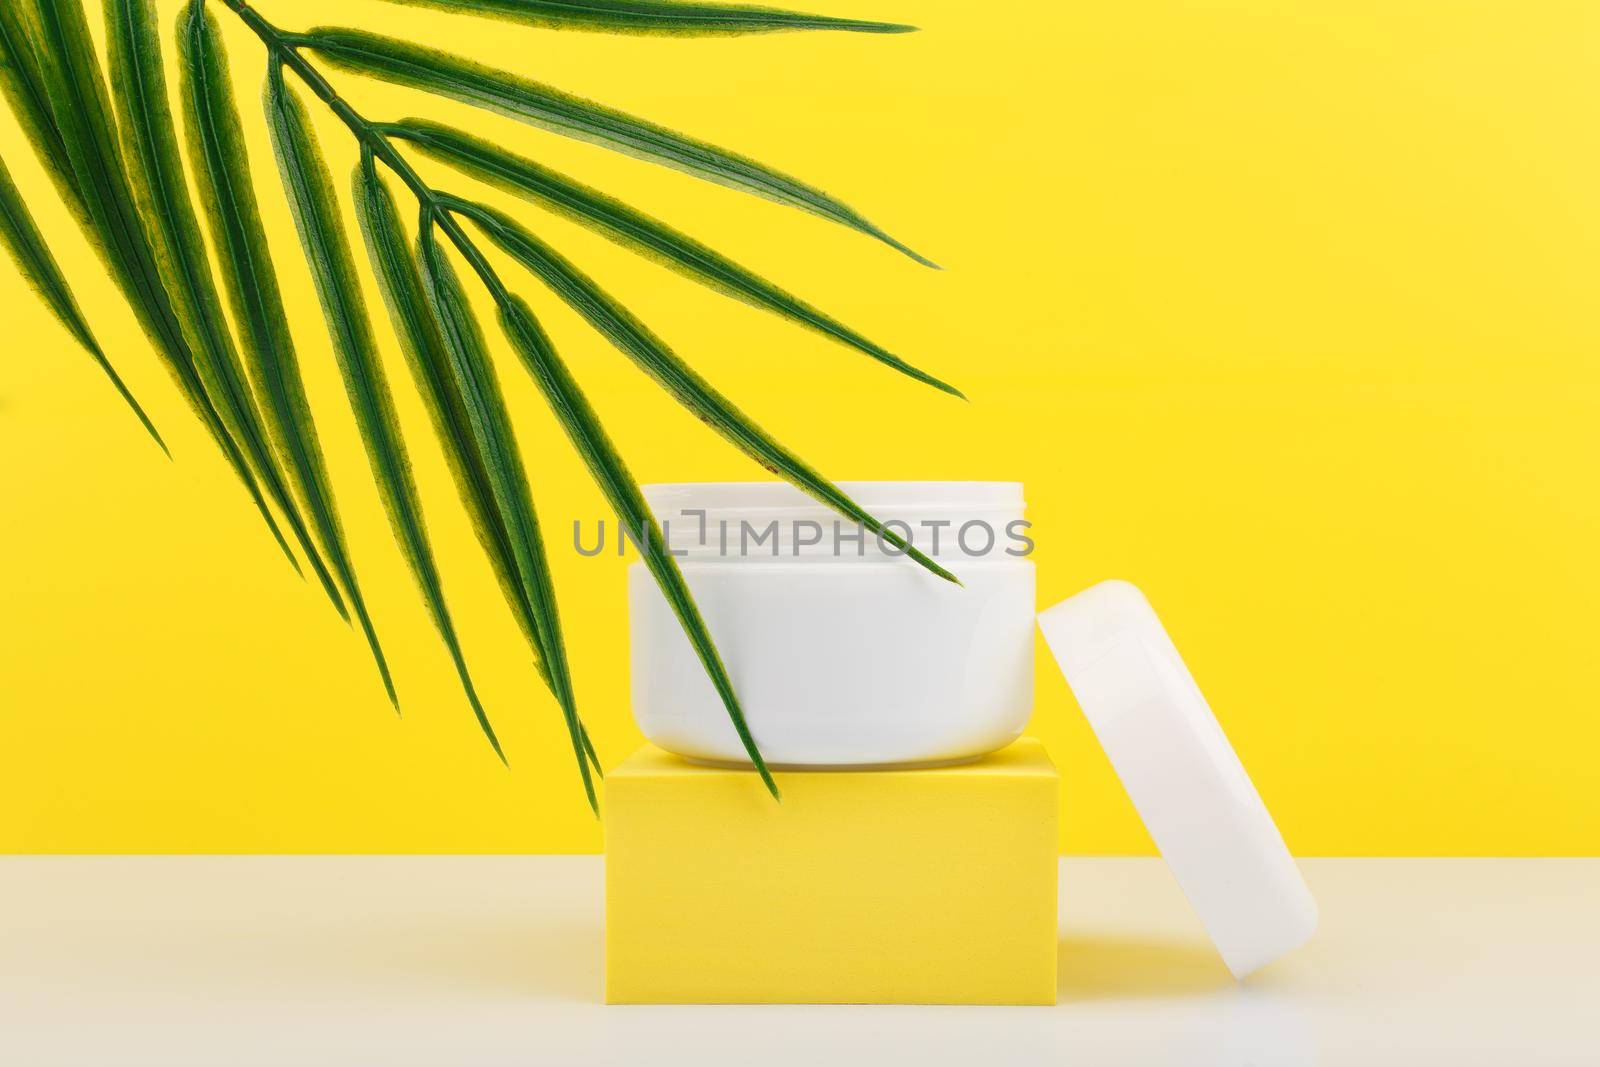 White opened cosmetic jar on yellow podium with palm leaf against bright yellow background. by Senorina_Irina